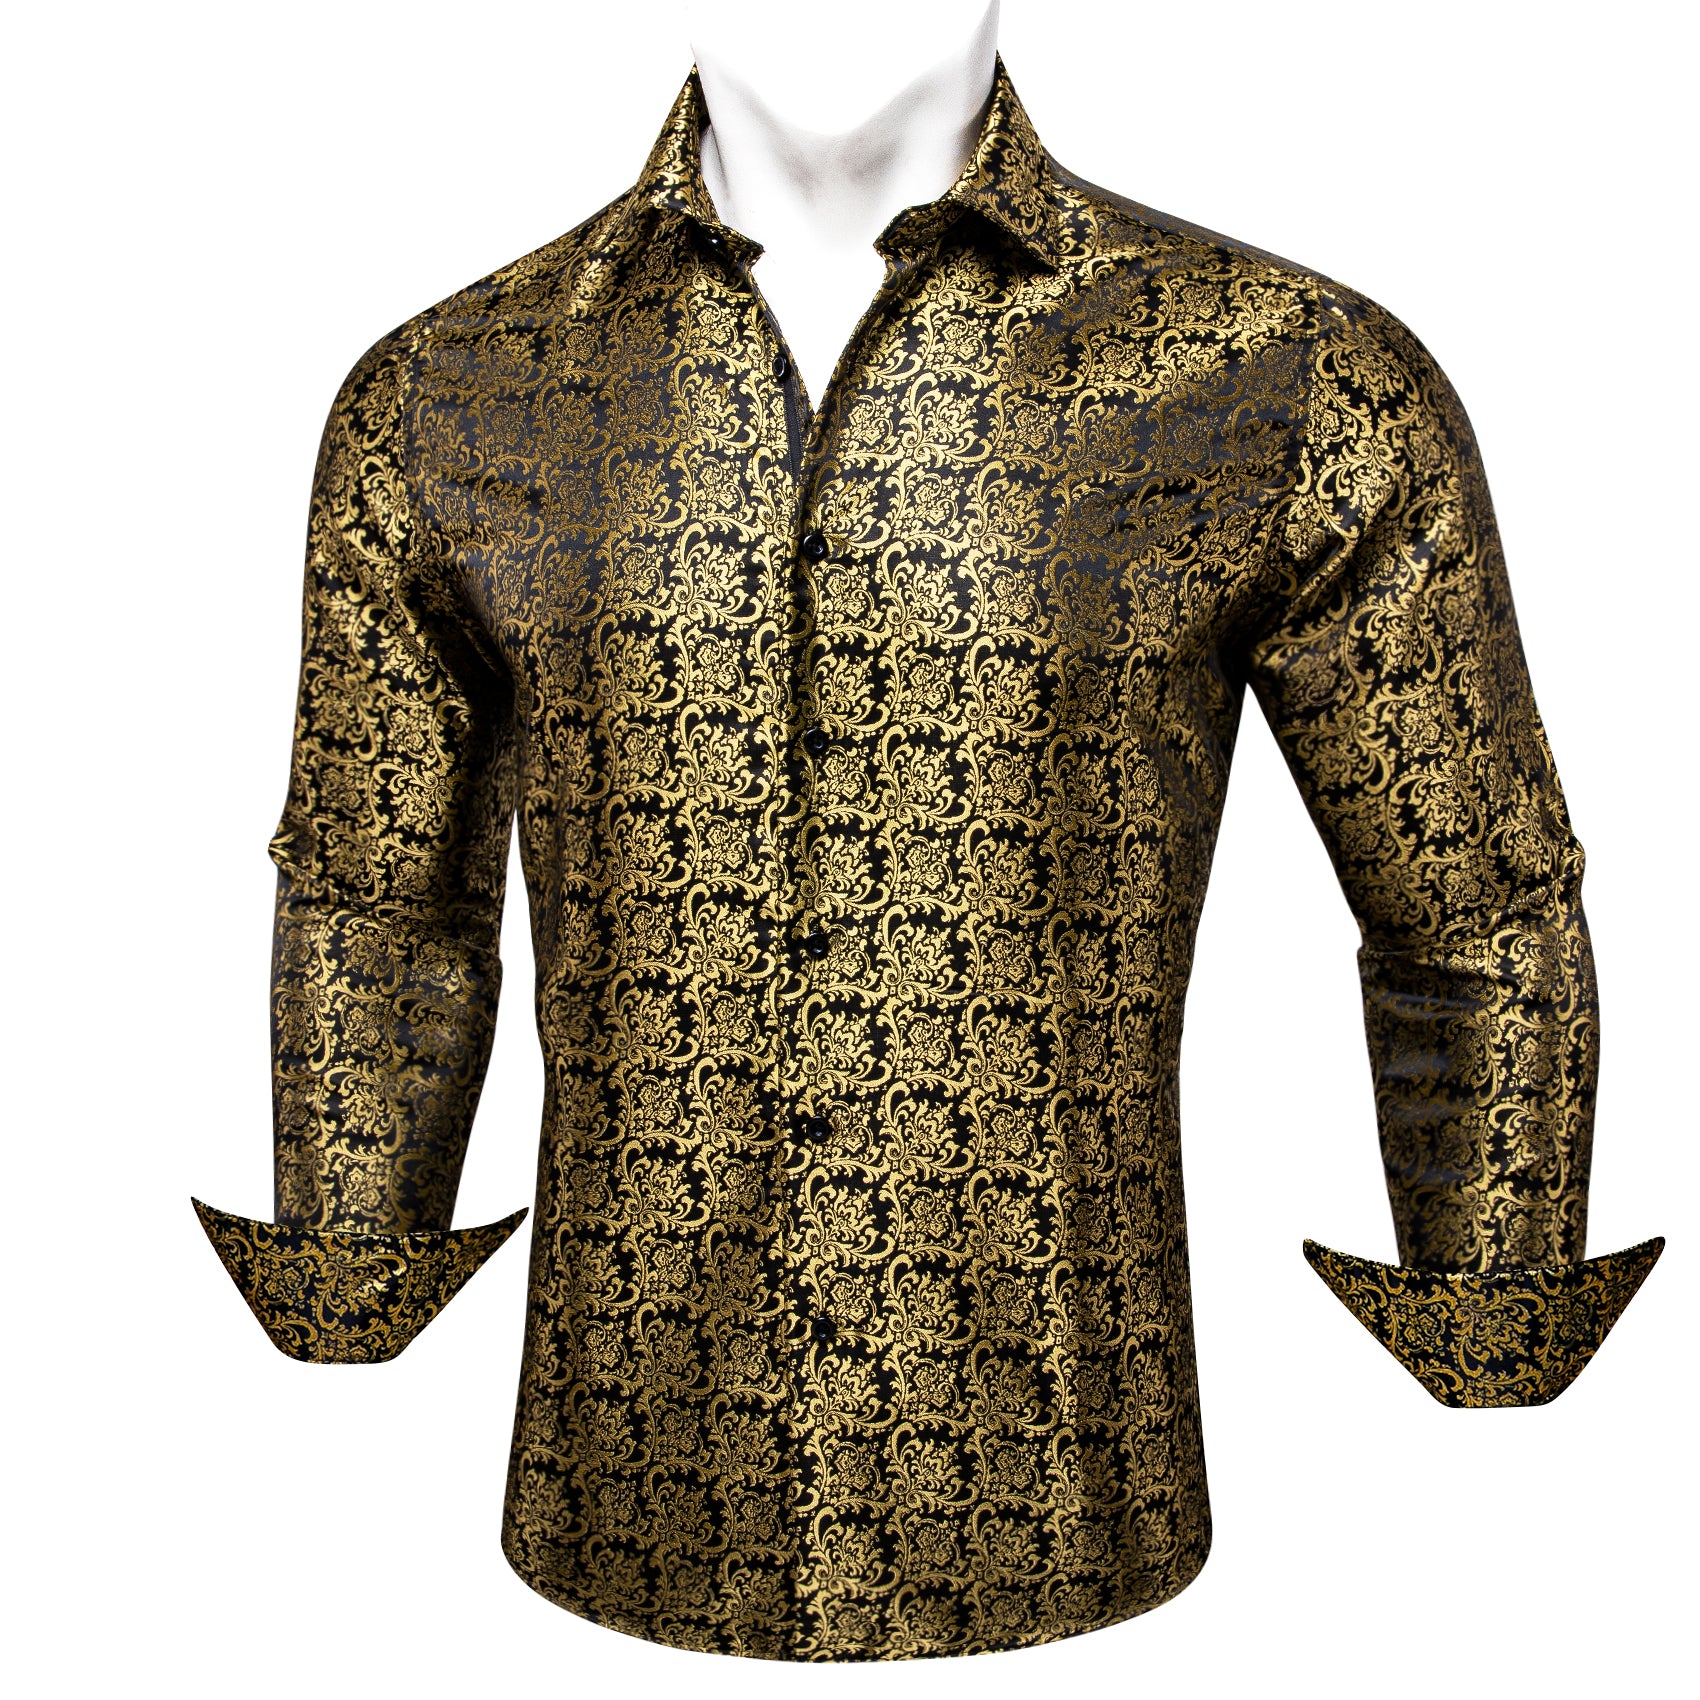 Barry.wang New Fashionable Black Golden Silk Floral Long Sleeve Men's Shirt